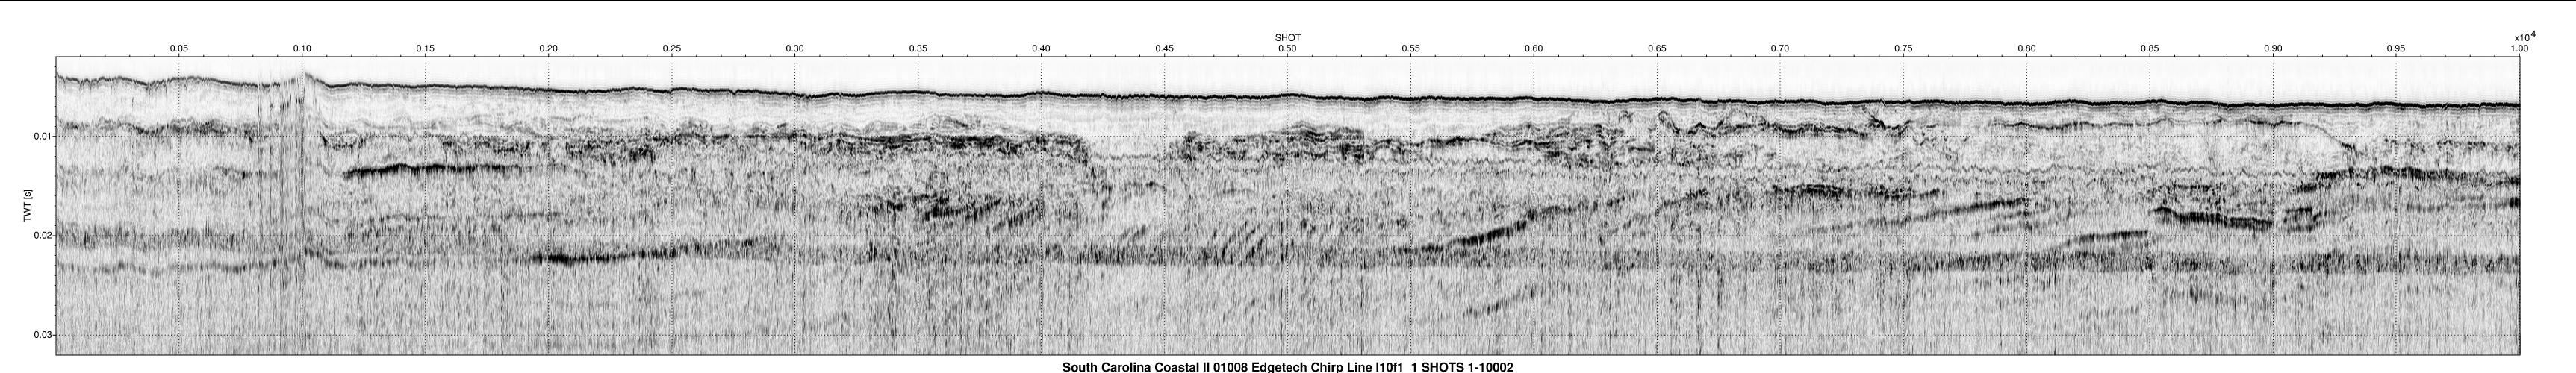 Seismic Profiles Image.